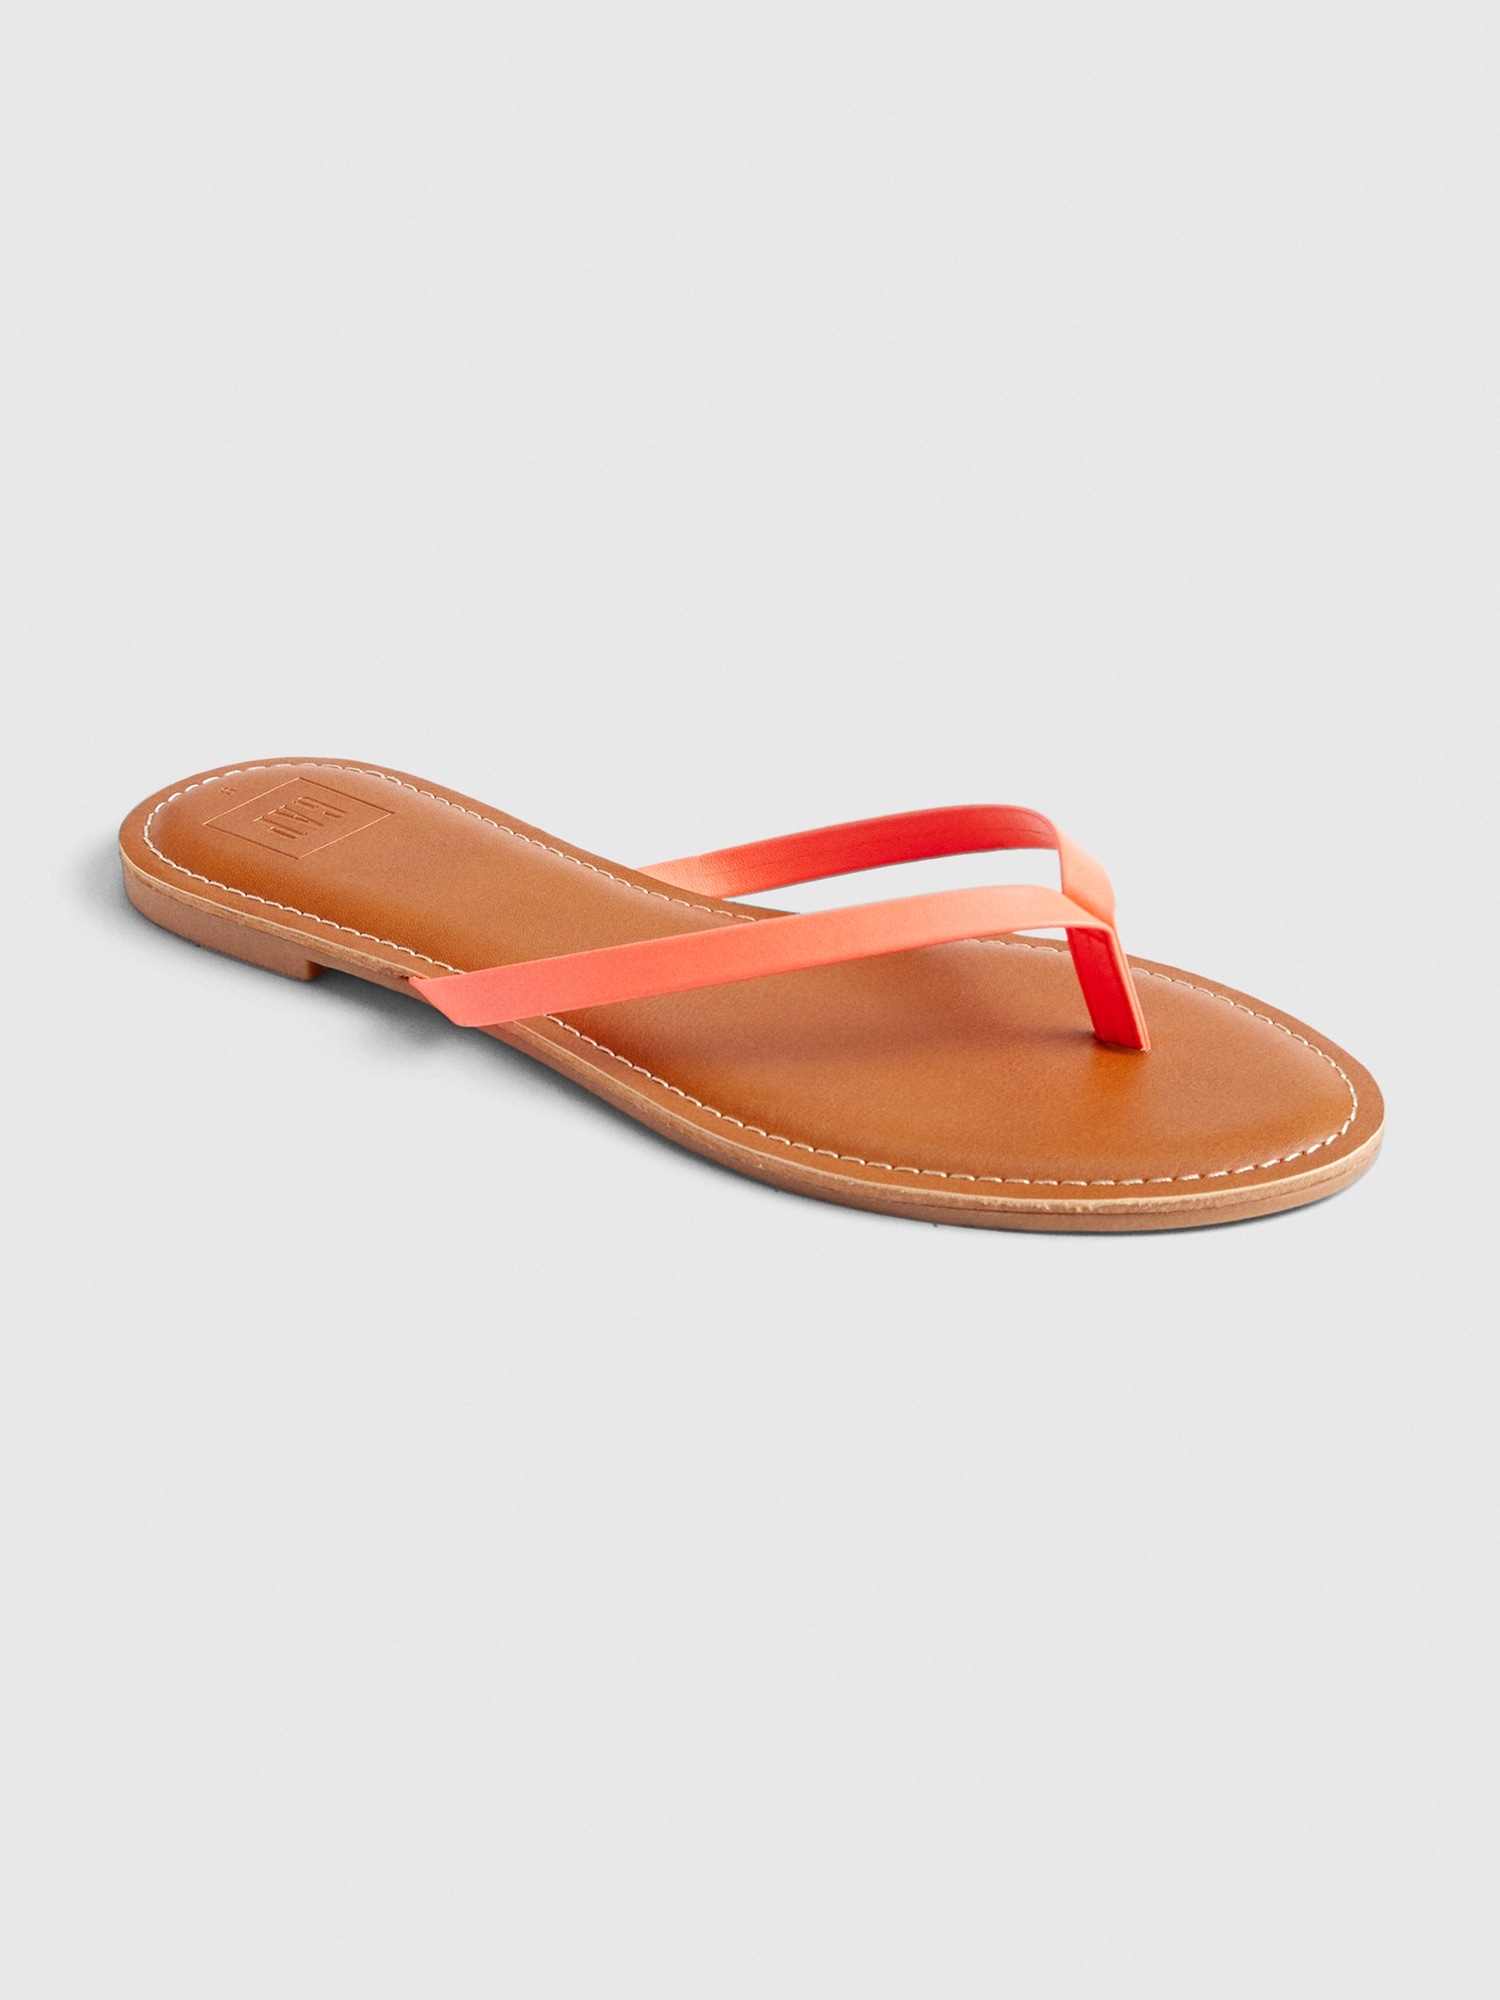 Faux Leather Flip Flops | Gap